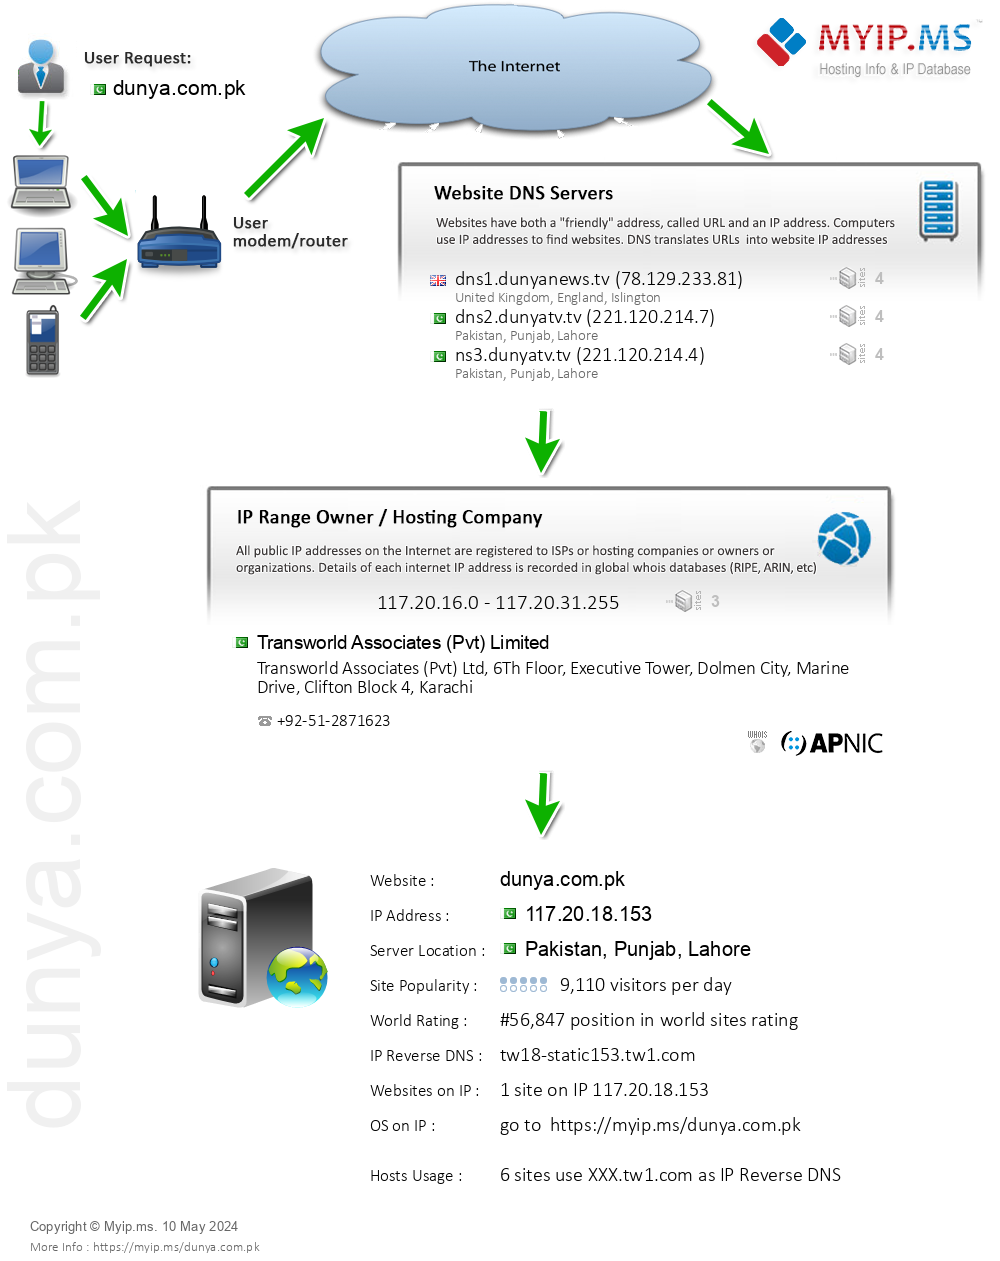 Dunya.com.pk - Website Hosting Visual IP Diagram